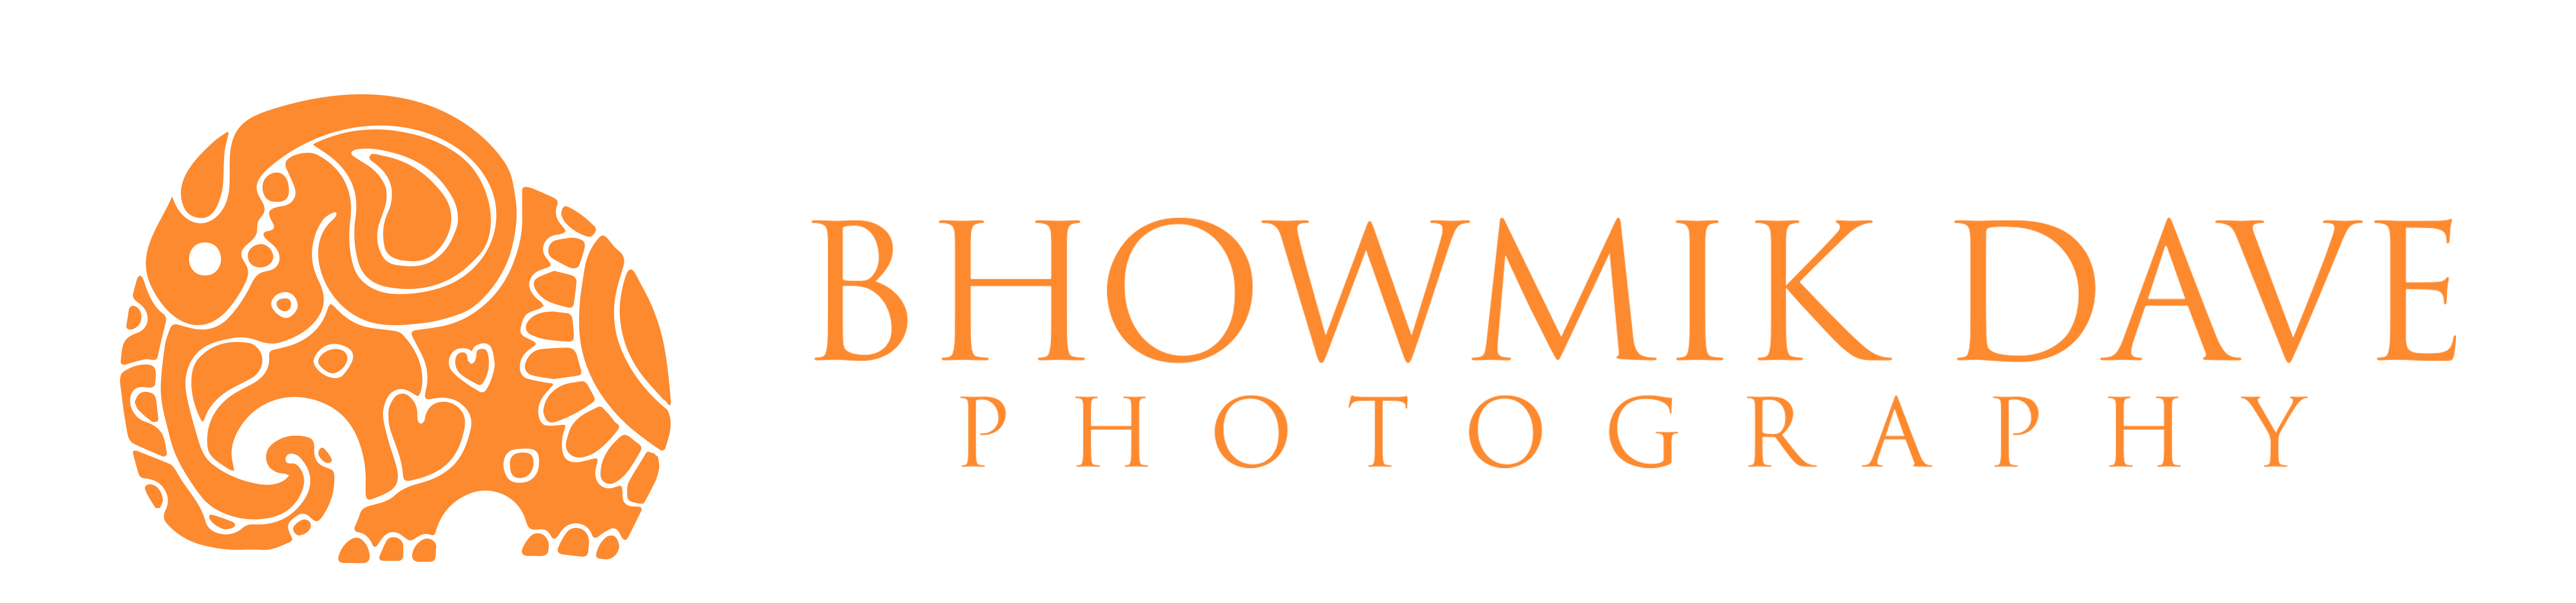 Bhowmik Dave Photography